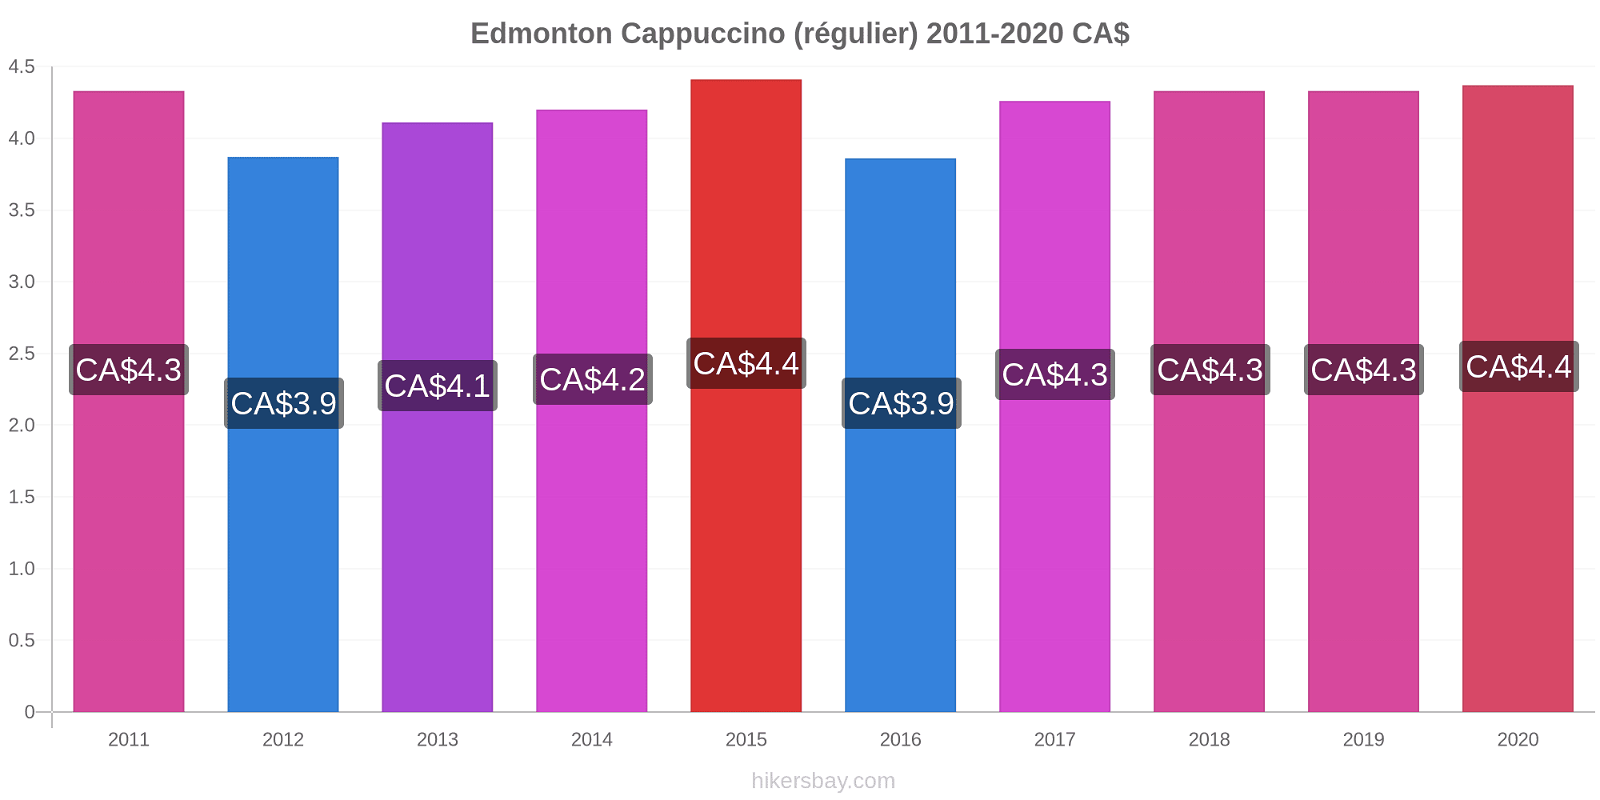 Edmonton changements de prix Cappuccino (régulier) hikersbay.com